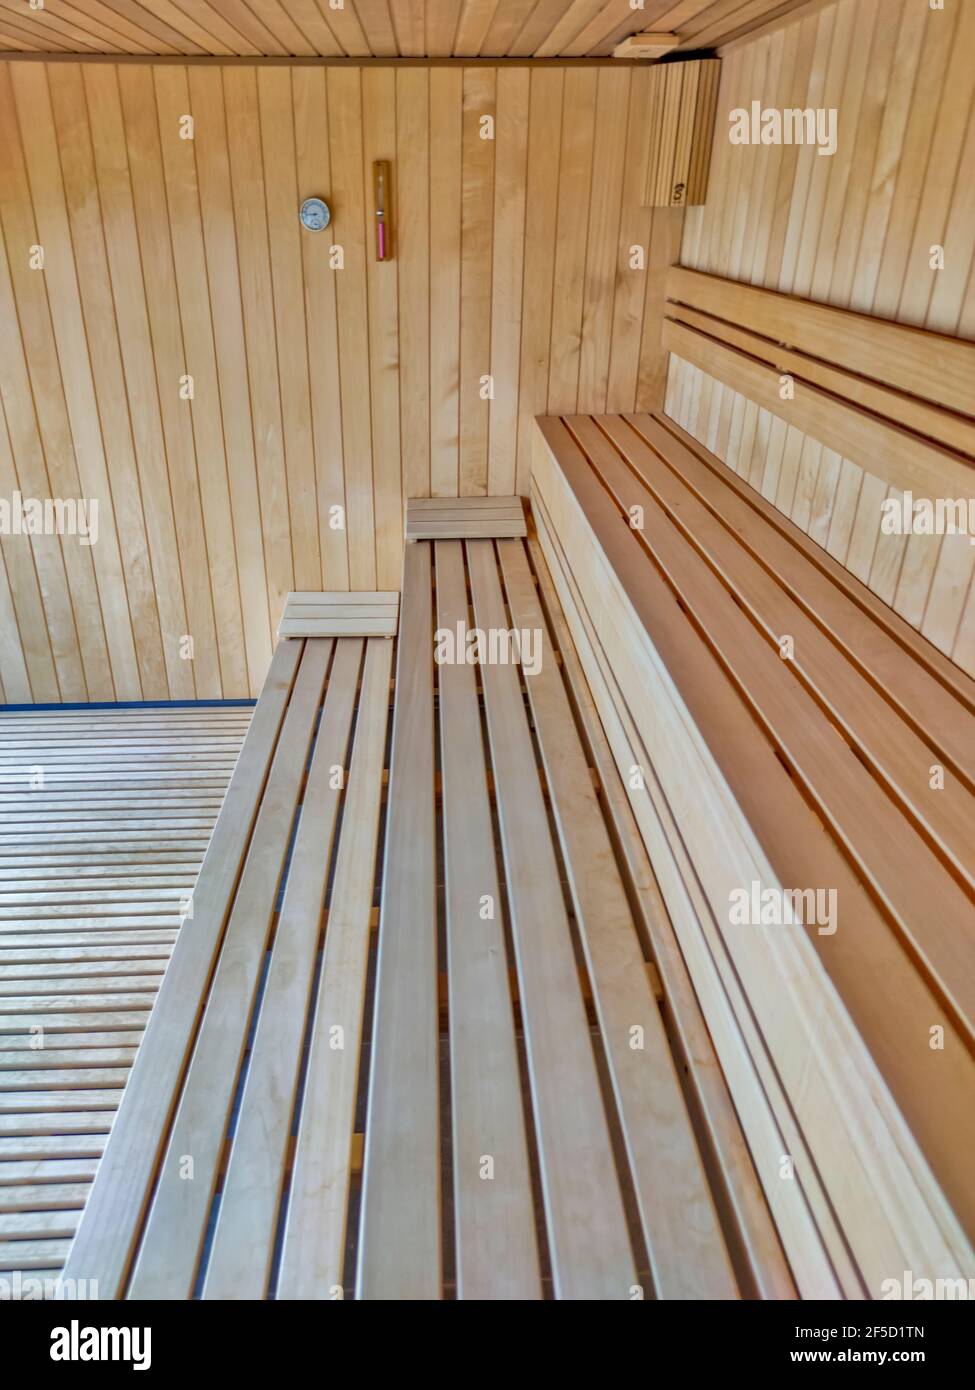 Interior of the empty new wooden sauna Stock Photo